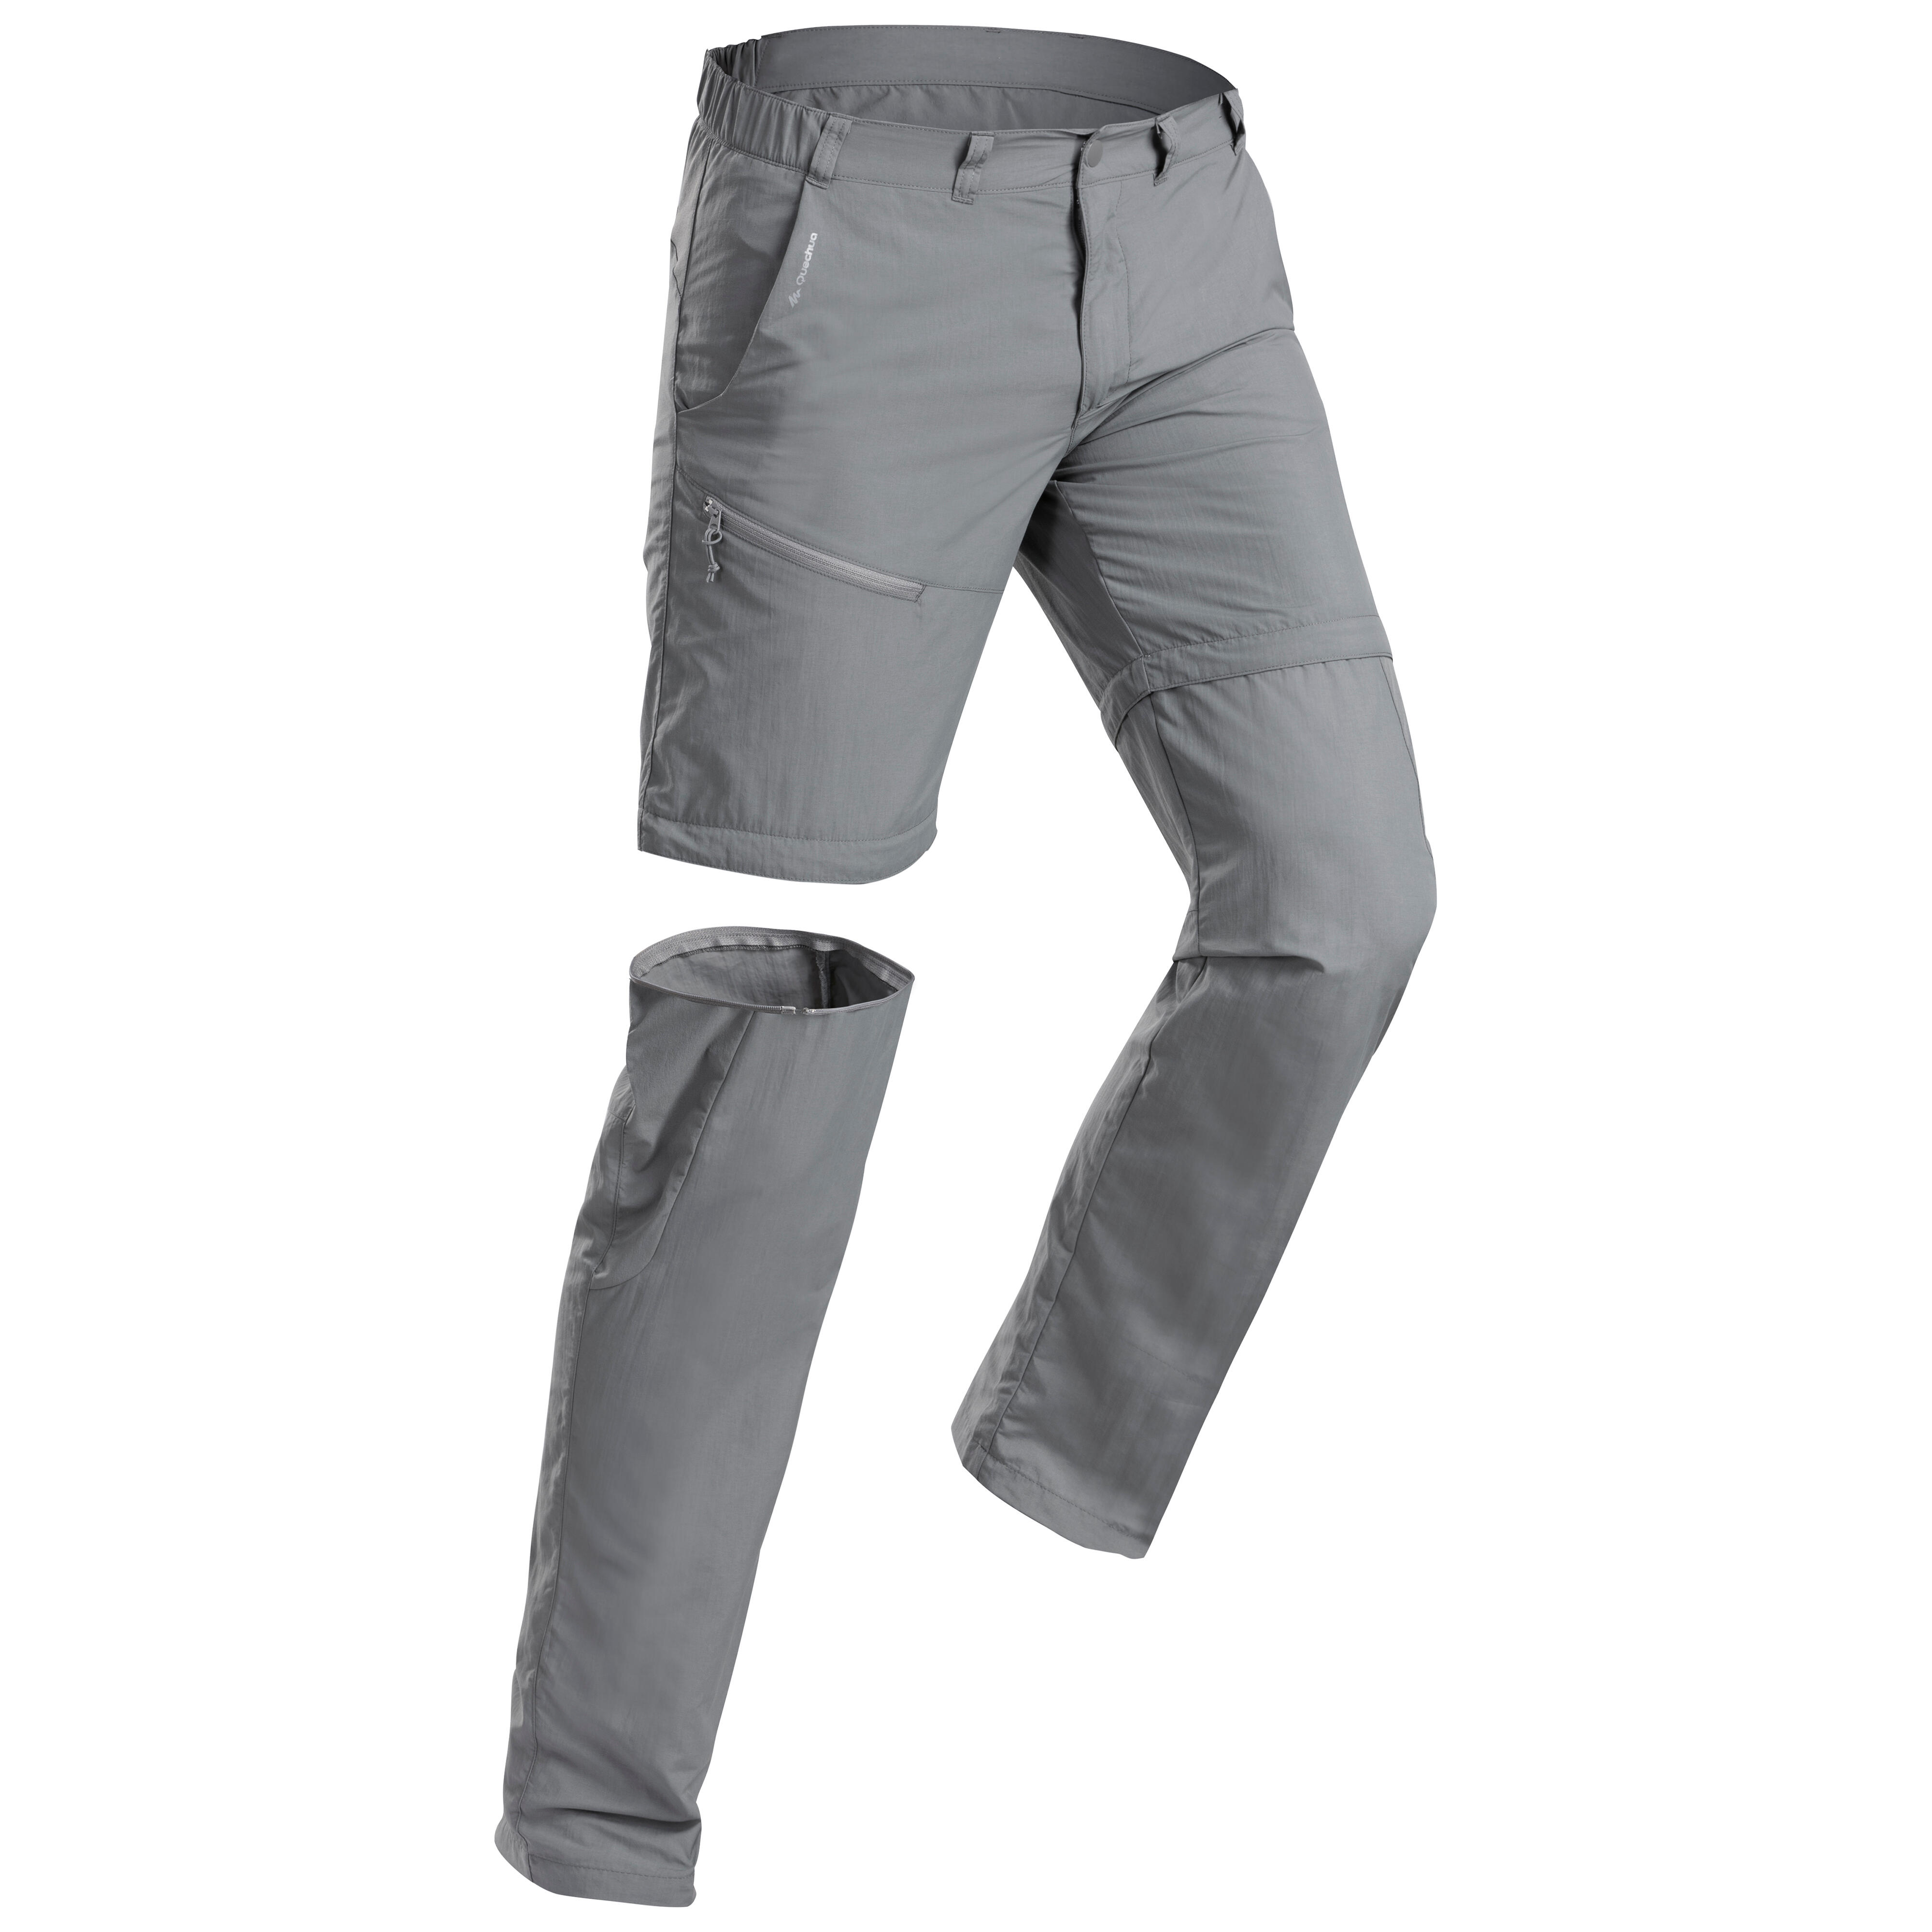 MH150 Convertible Mountain Hiking Pants - Men - Charcoal grey - Quechua -  Decathlon